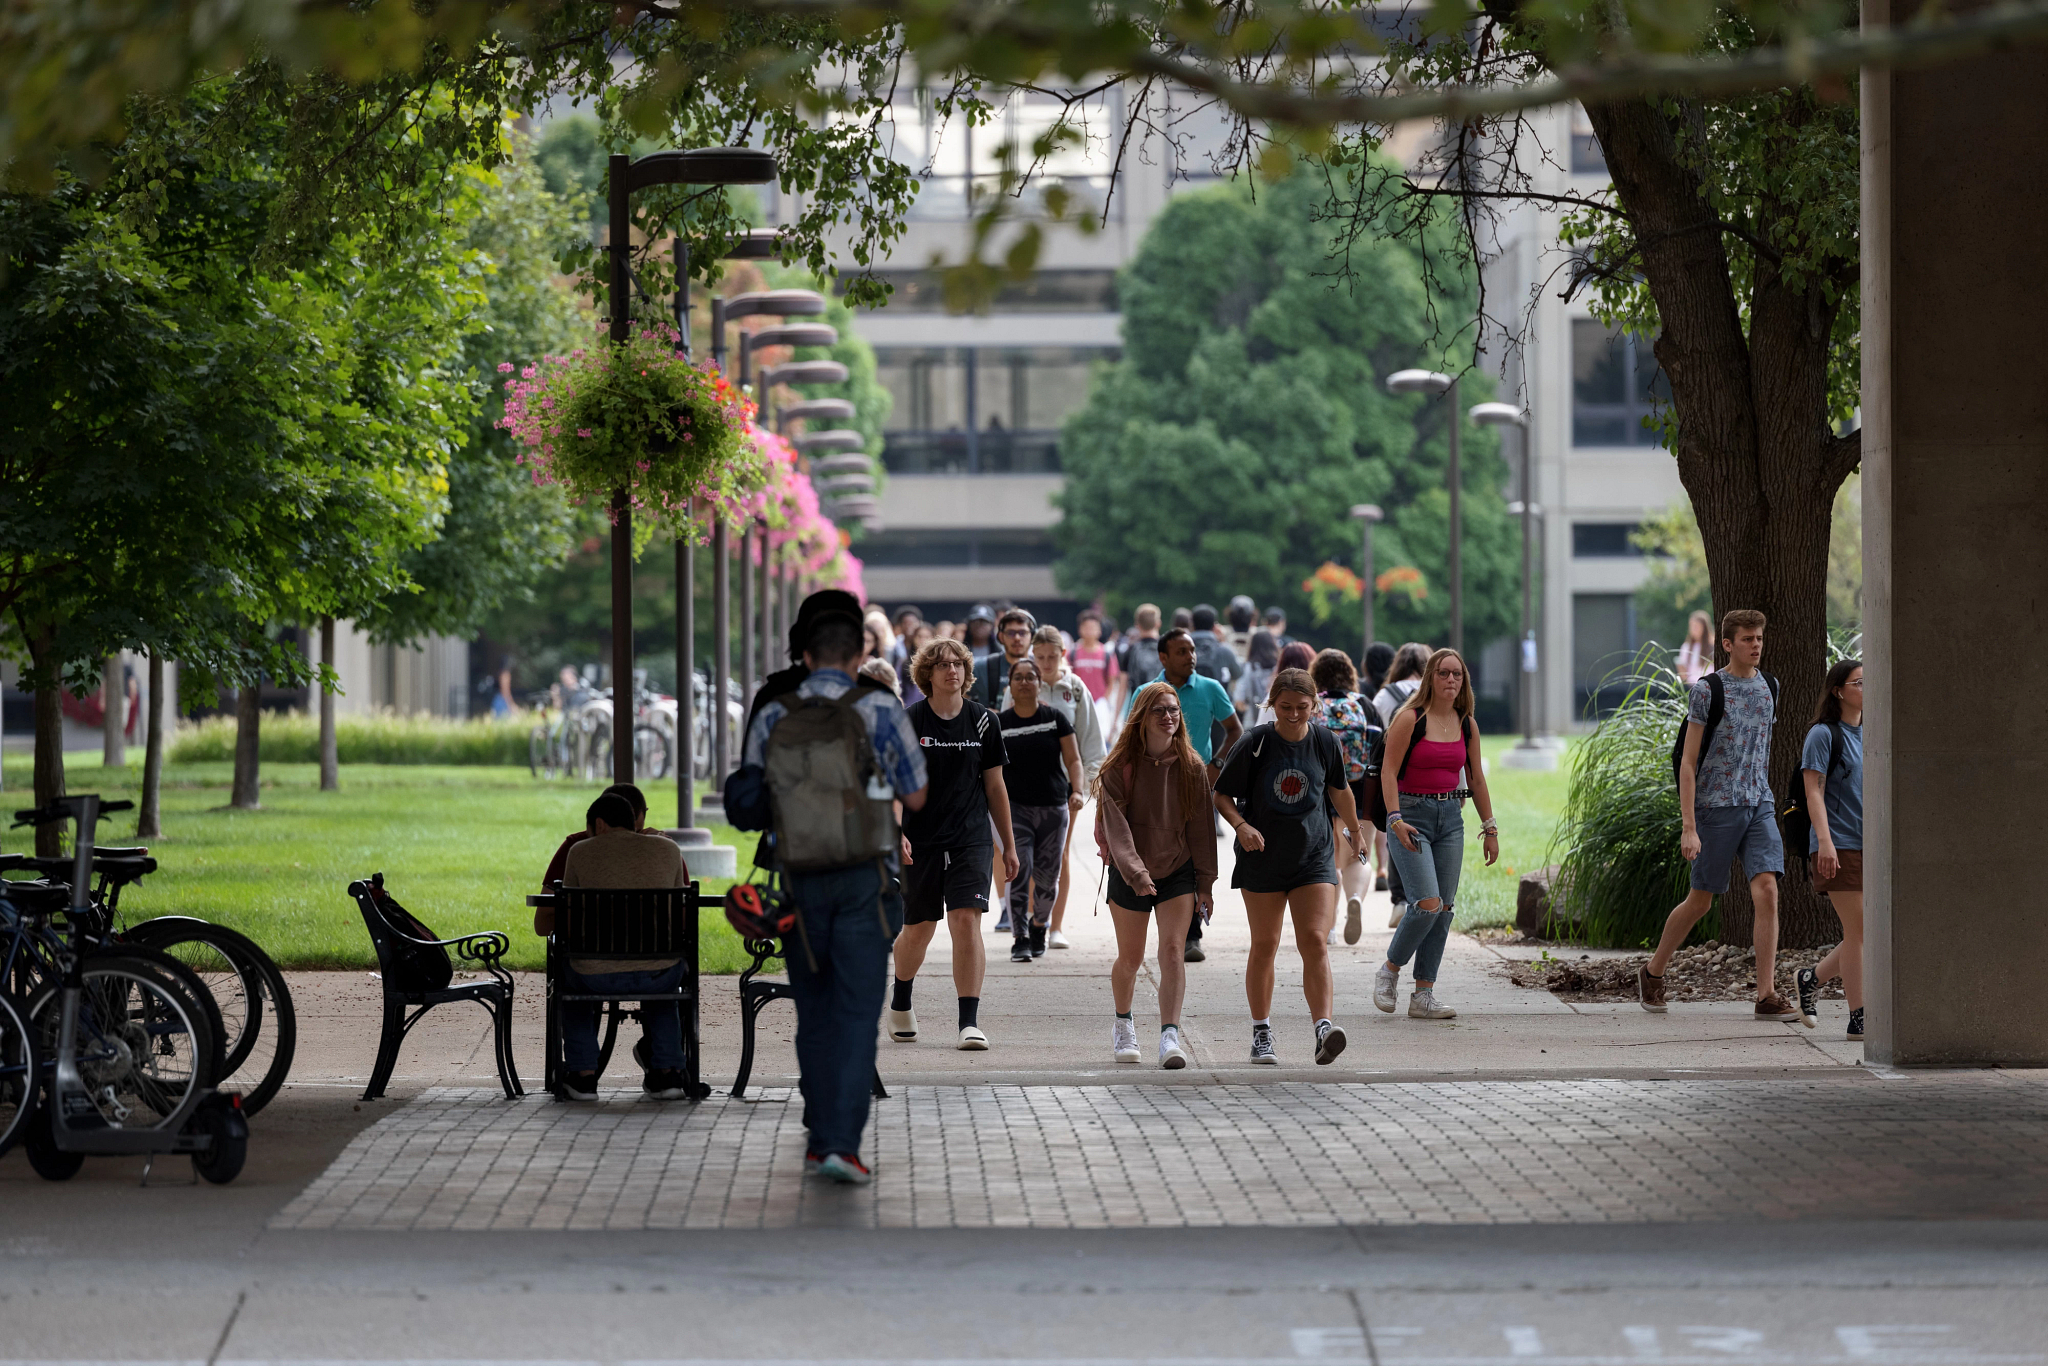 Diversity, academic success key themes in IU's fall 2022 class: IU News